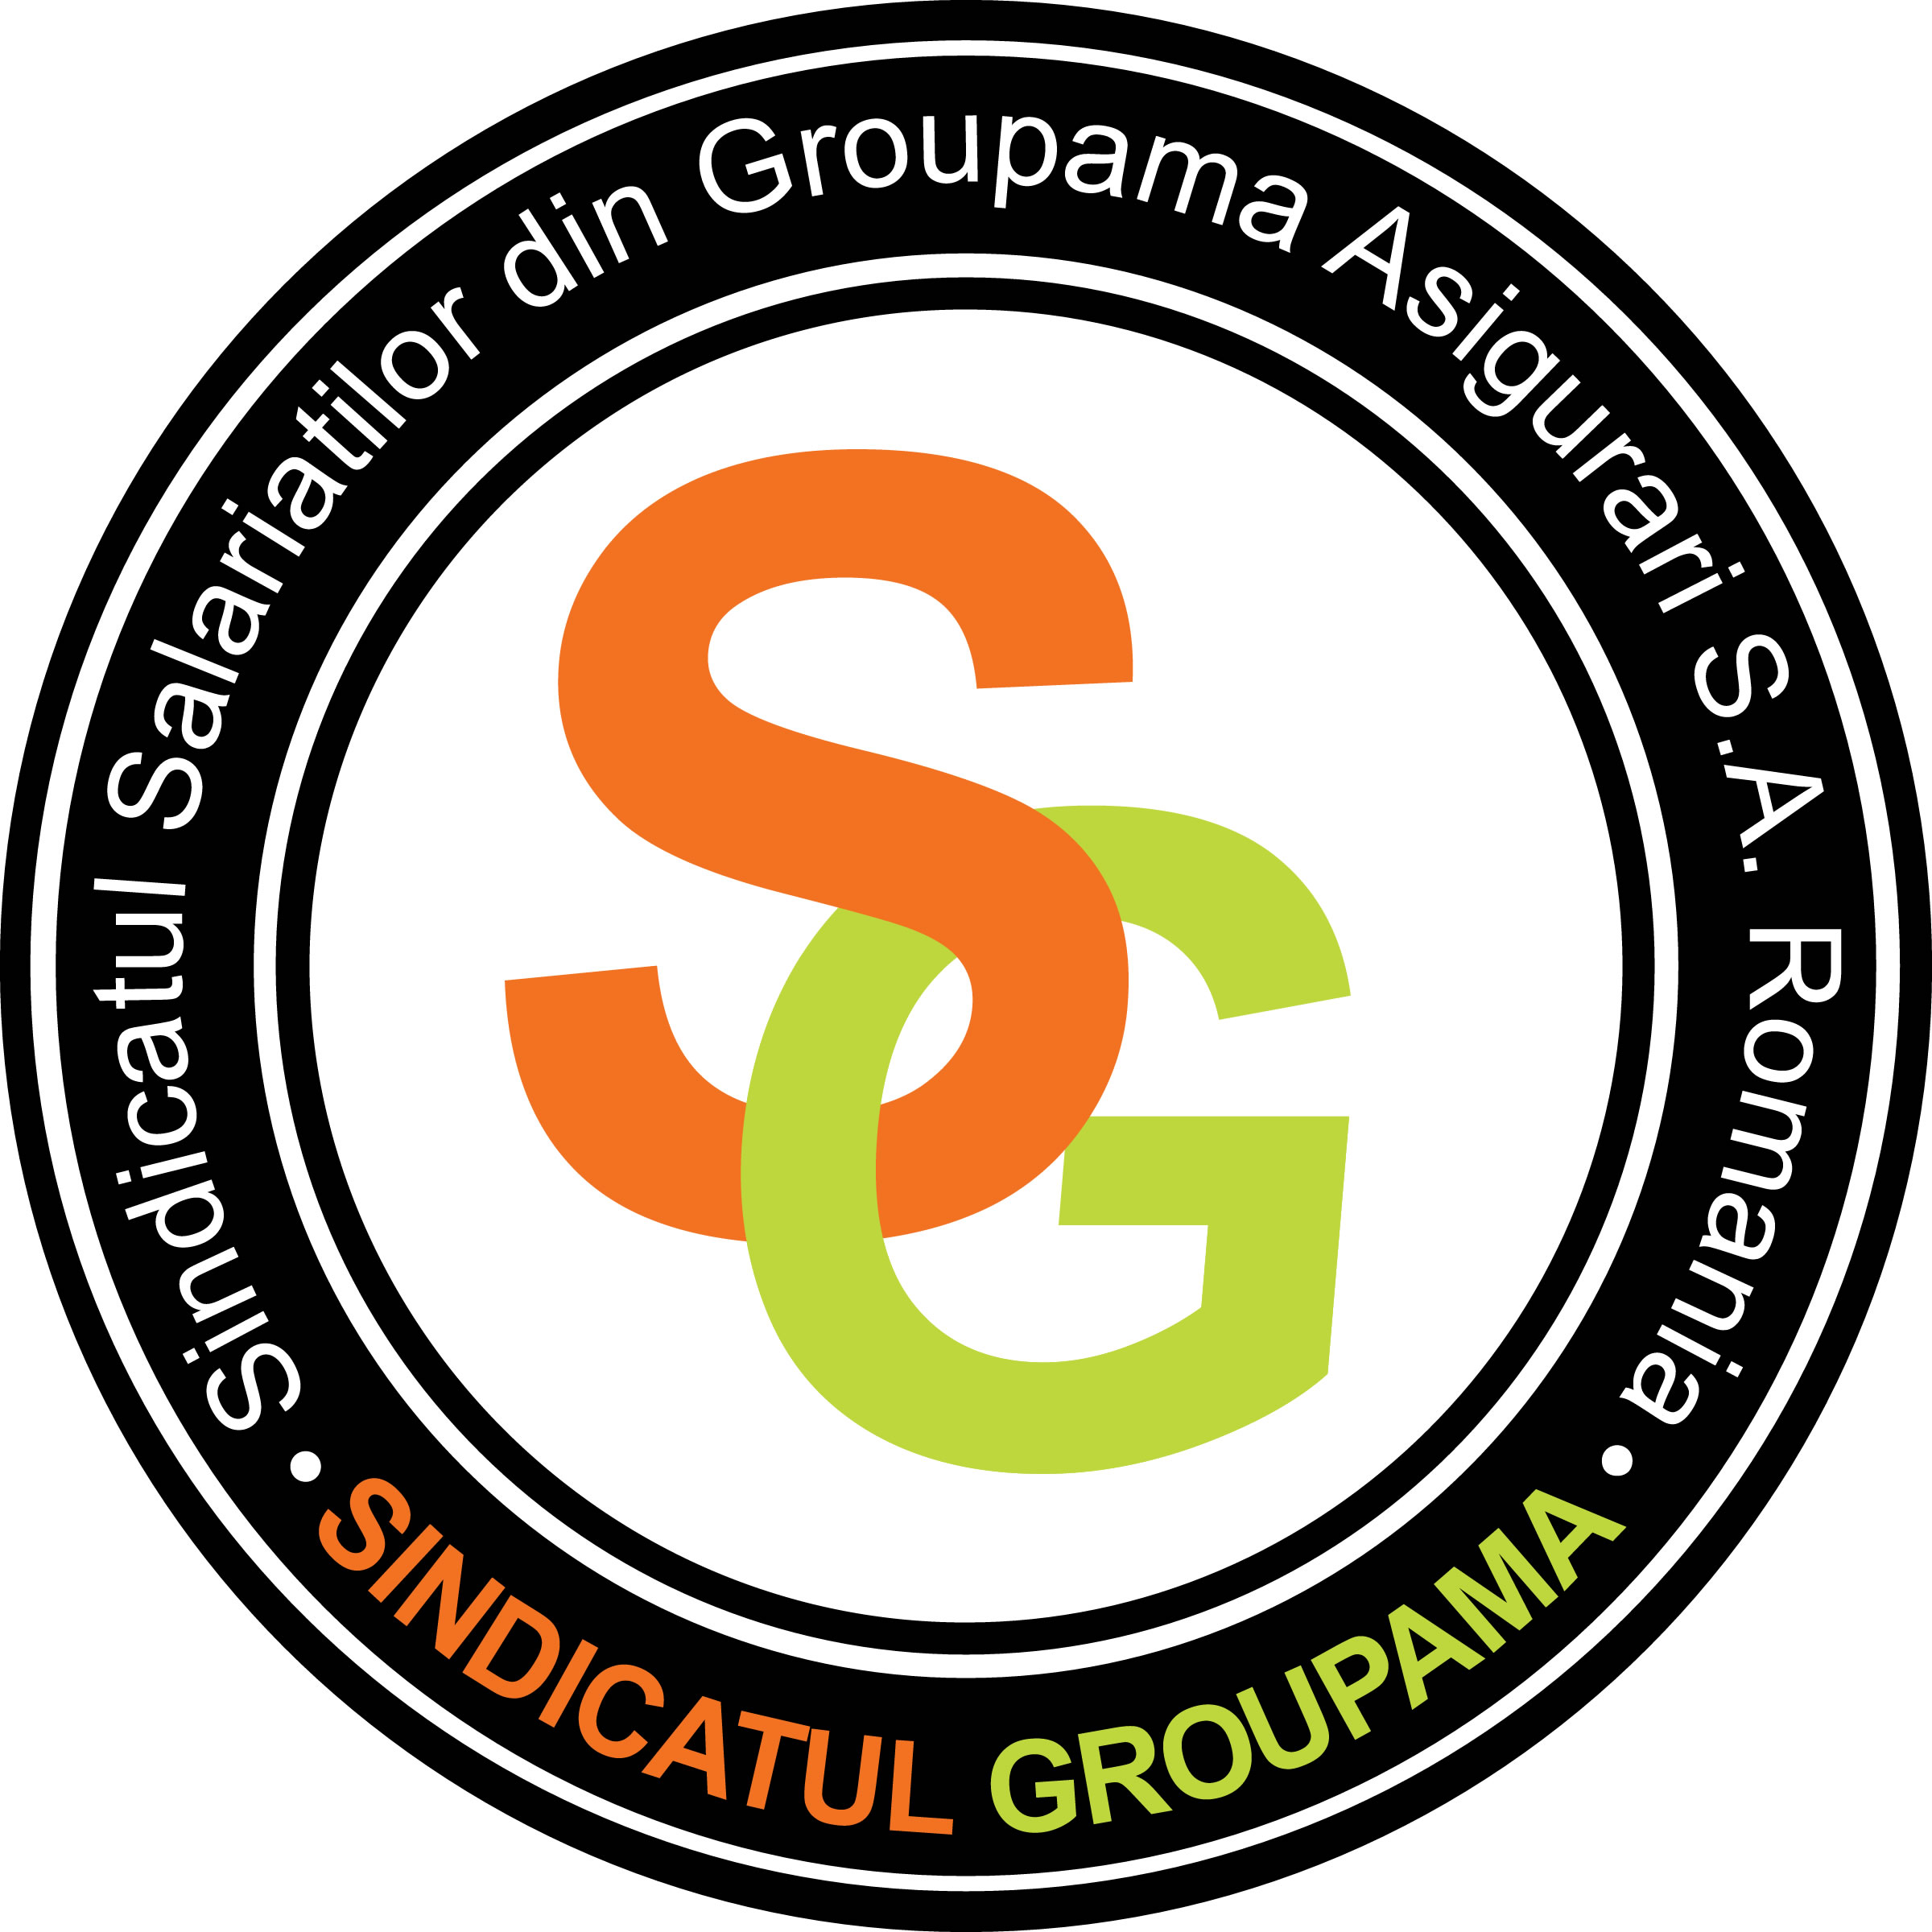 Sindicat Groupama logo